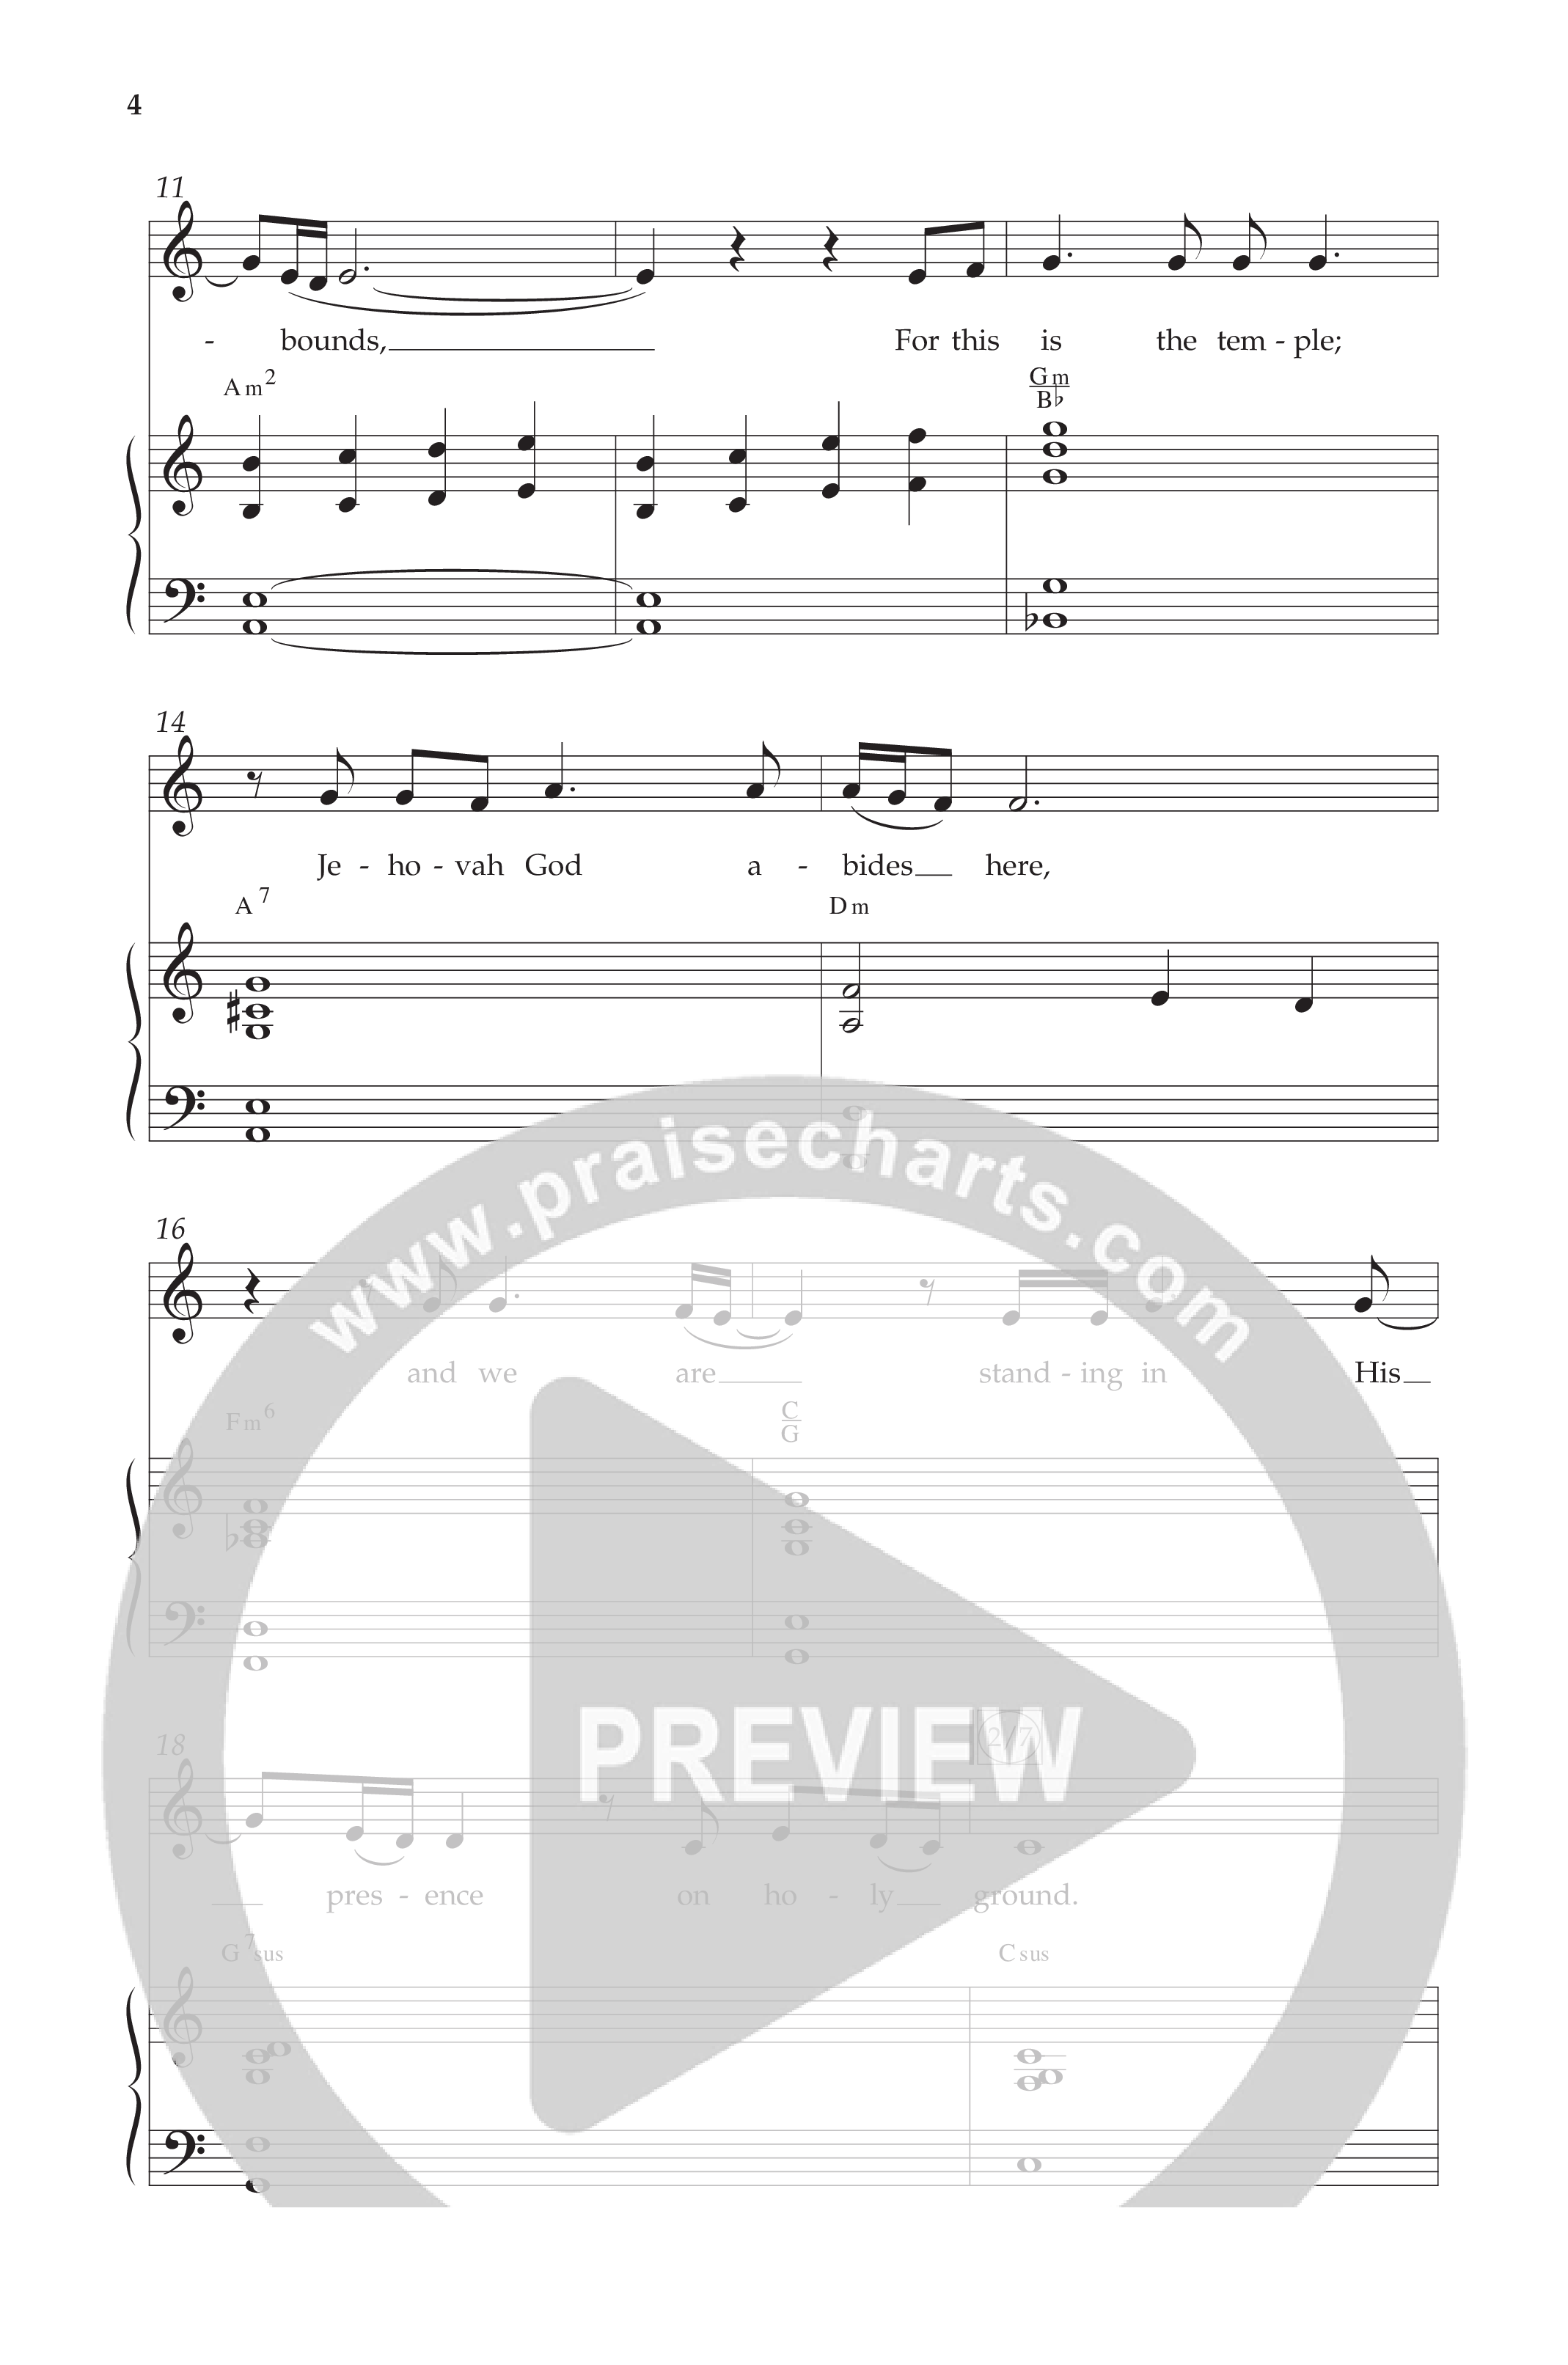 Holy Ground (Choral Anthem SATB) Anthem (SATB/Piano) (Lifeway Choral / Arr. Bradley Knight)